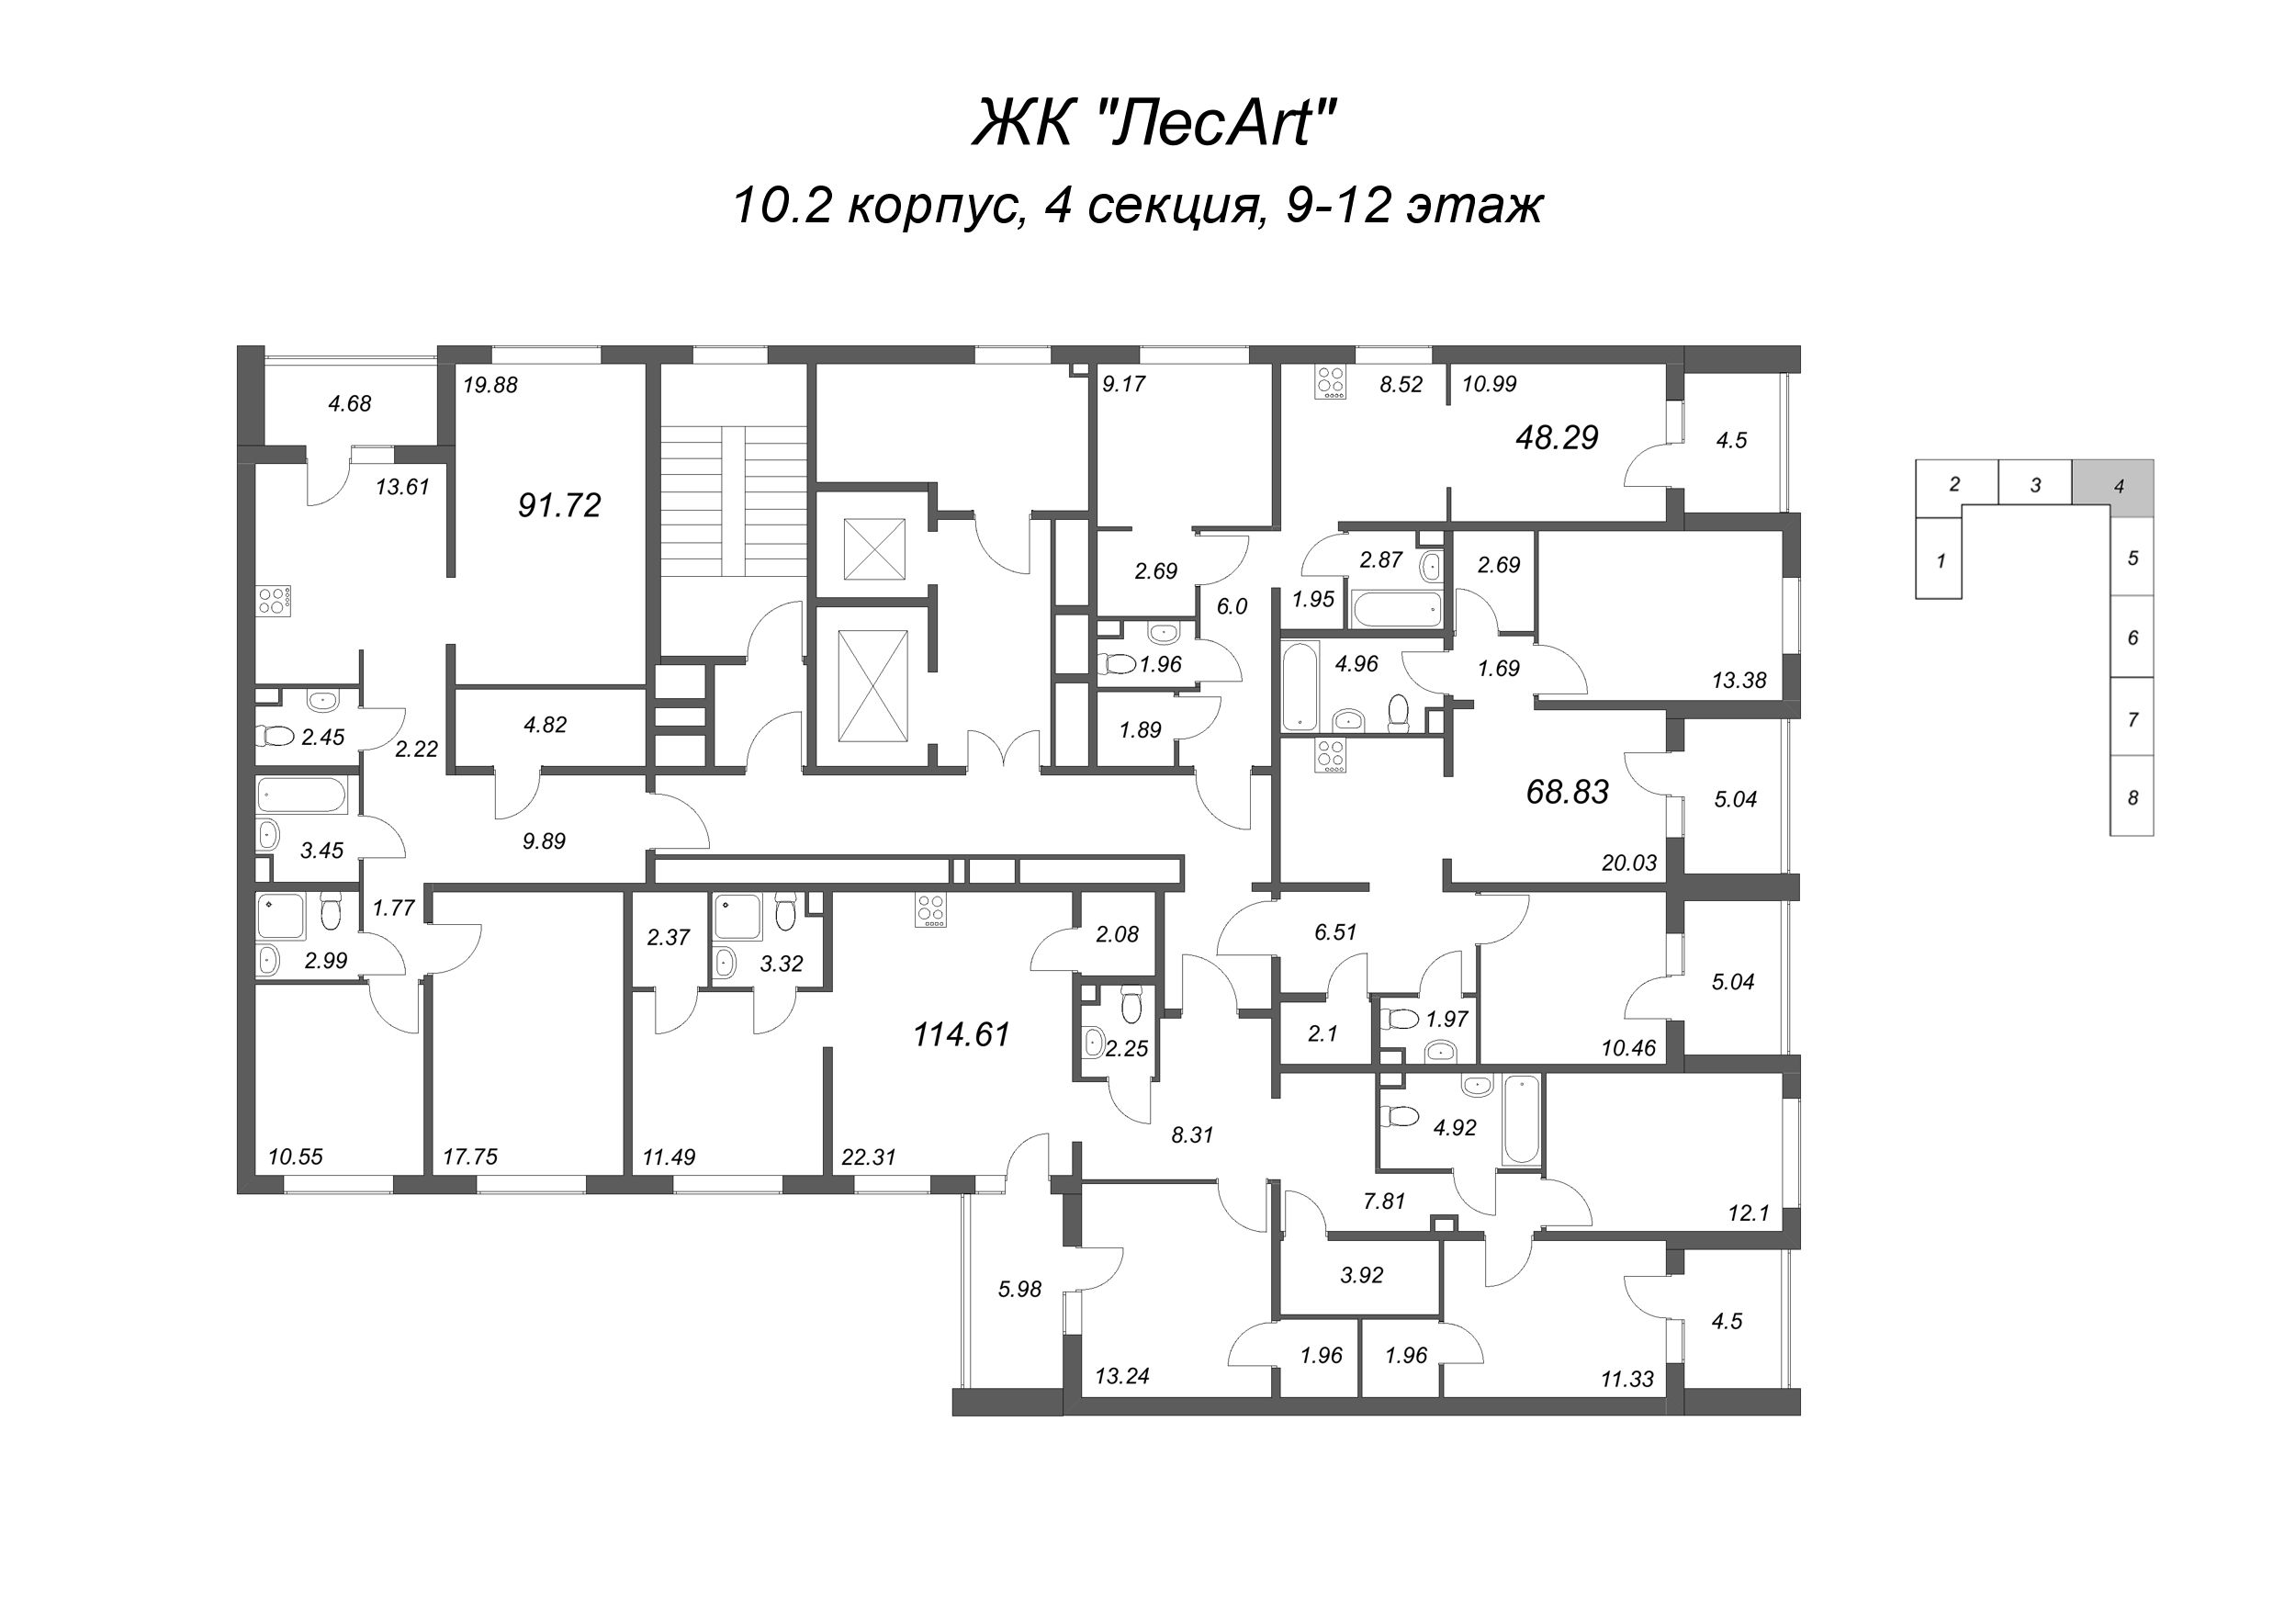 5-комнатная (Евро) квартира, 114.61 м² в ЖК "ЛесArt" - планировка этажа